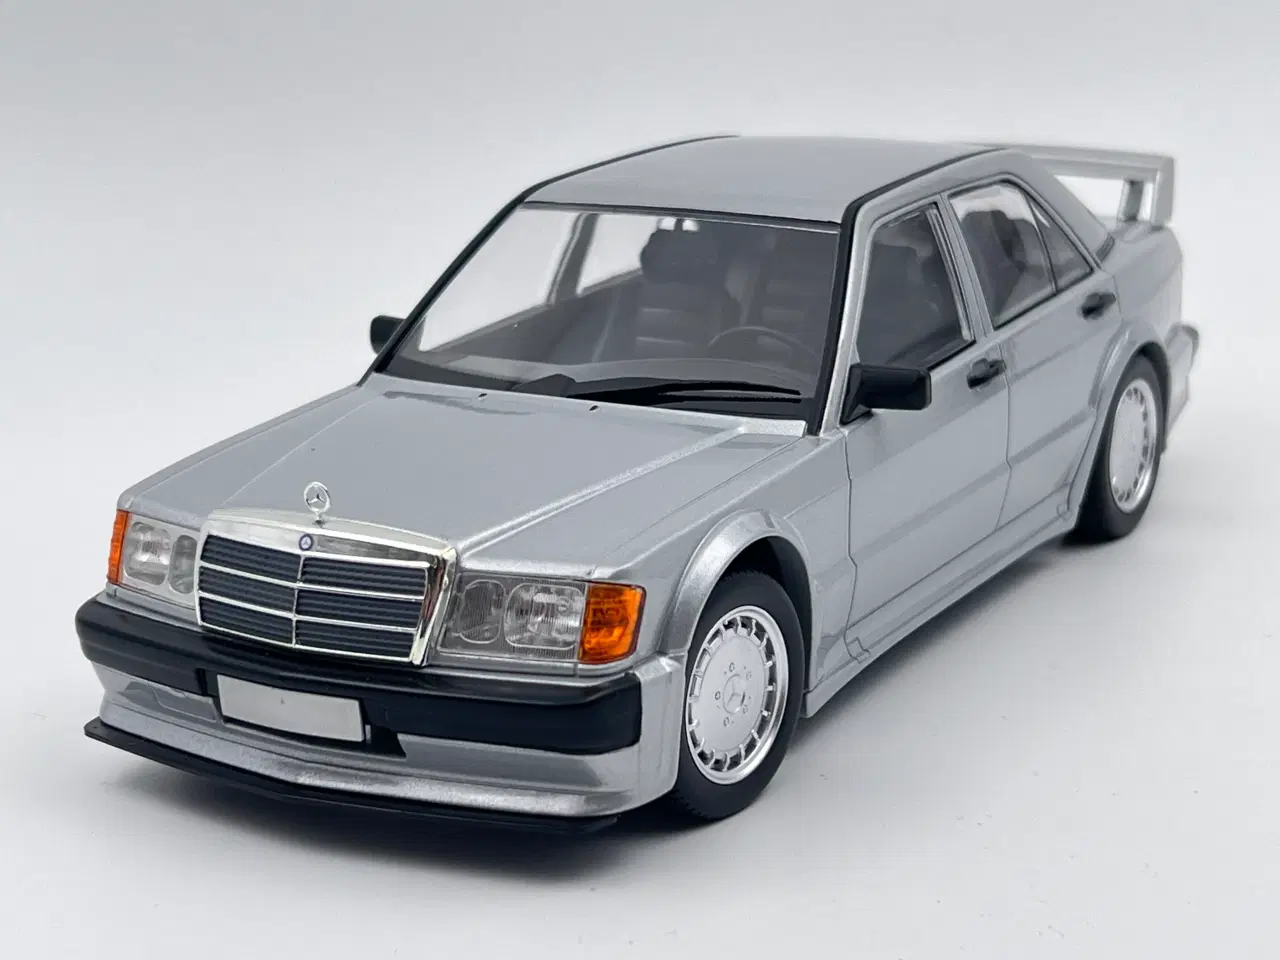 Billede 2 - 1989 Mercedes-Benz 190E 2.5-16 Evo 1 - 1:18